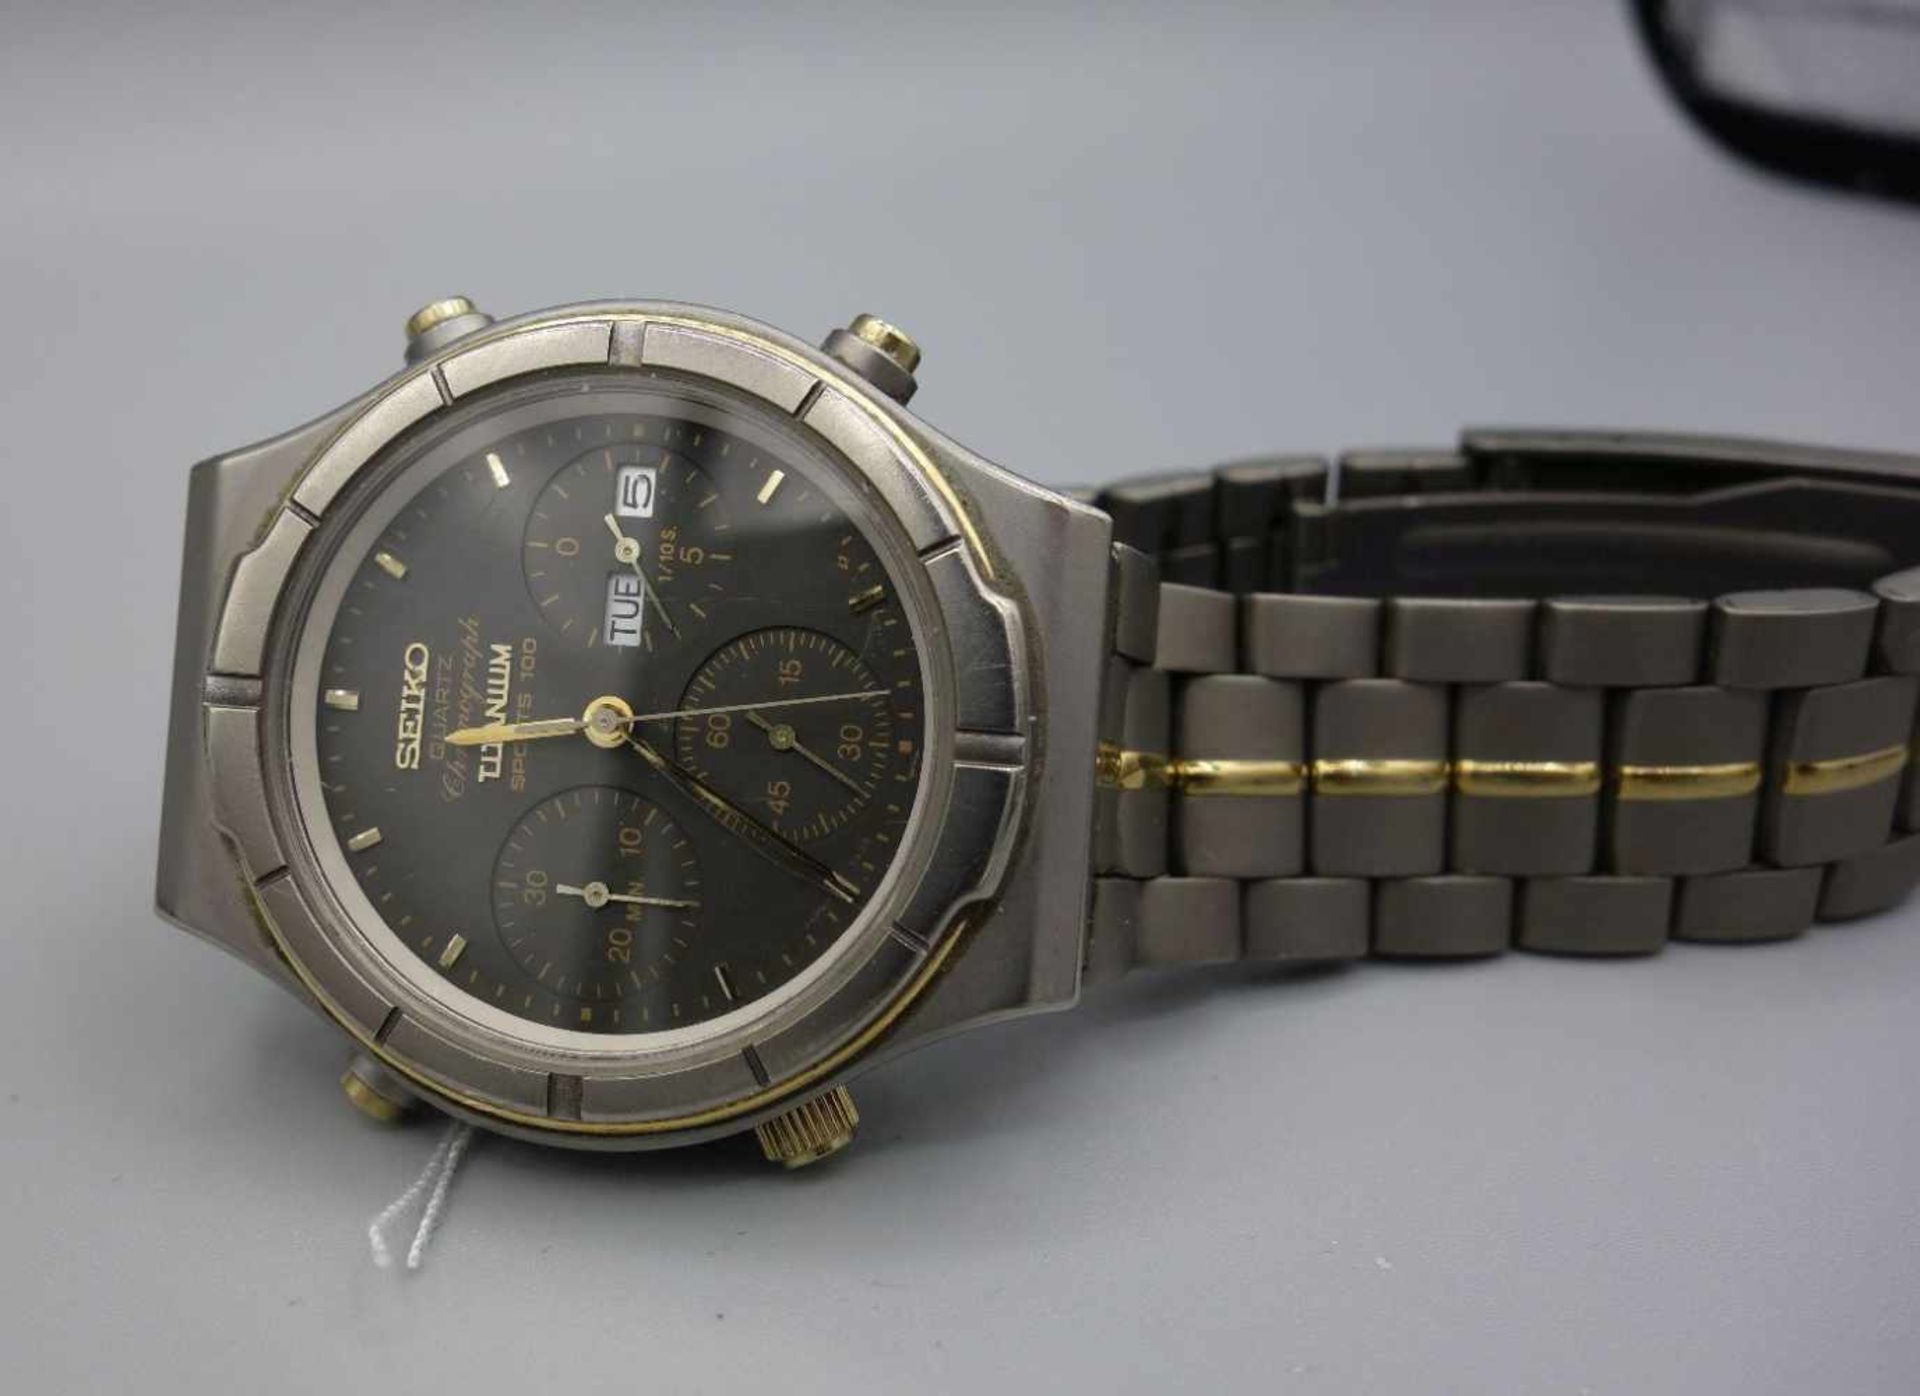 ARMBANDUHR: SEIKO CHRONOGRAPH TITANIUM SPORTS 100 / wristwatch, Japan, Quartz. Stahlgehäuse und - Bild 3 aus 7